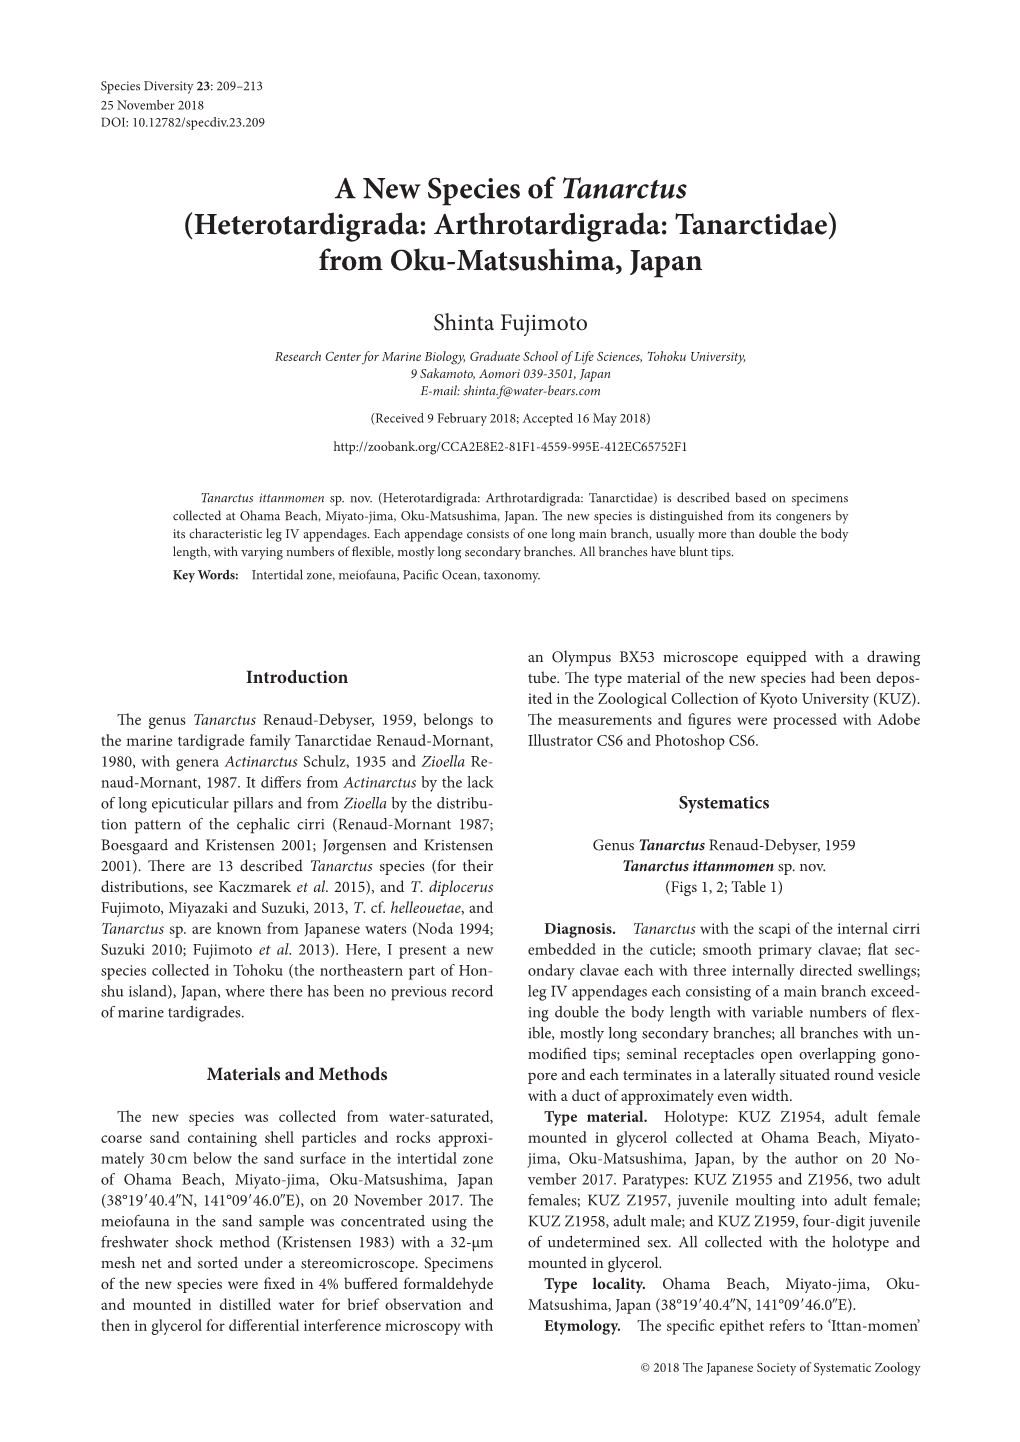 A New Species of Tanarctus (Heterotardigrada: Arthrotardigrada: Tanarctidae) from Oku-Matsushima, Japan